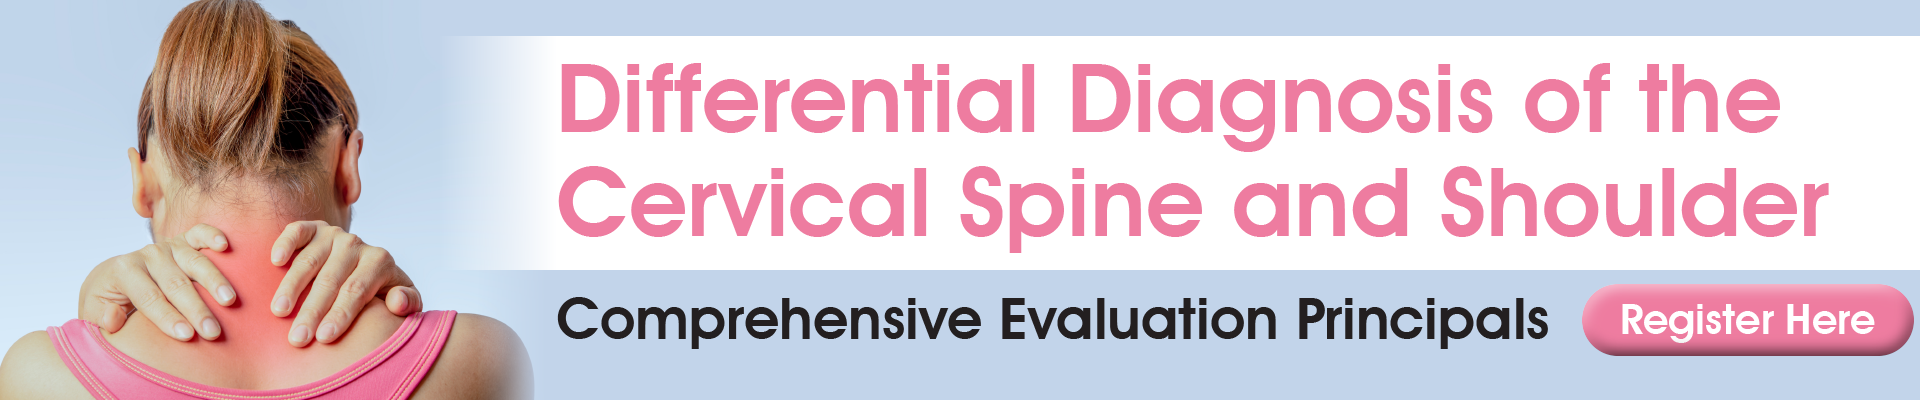 Differential Diagnosis of the Cervical Spine and Shoulder: Comprehensive Evaluation Principles